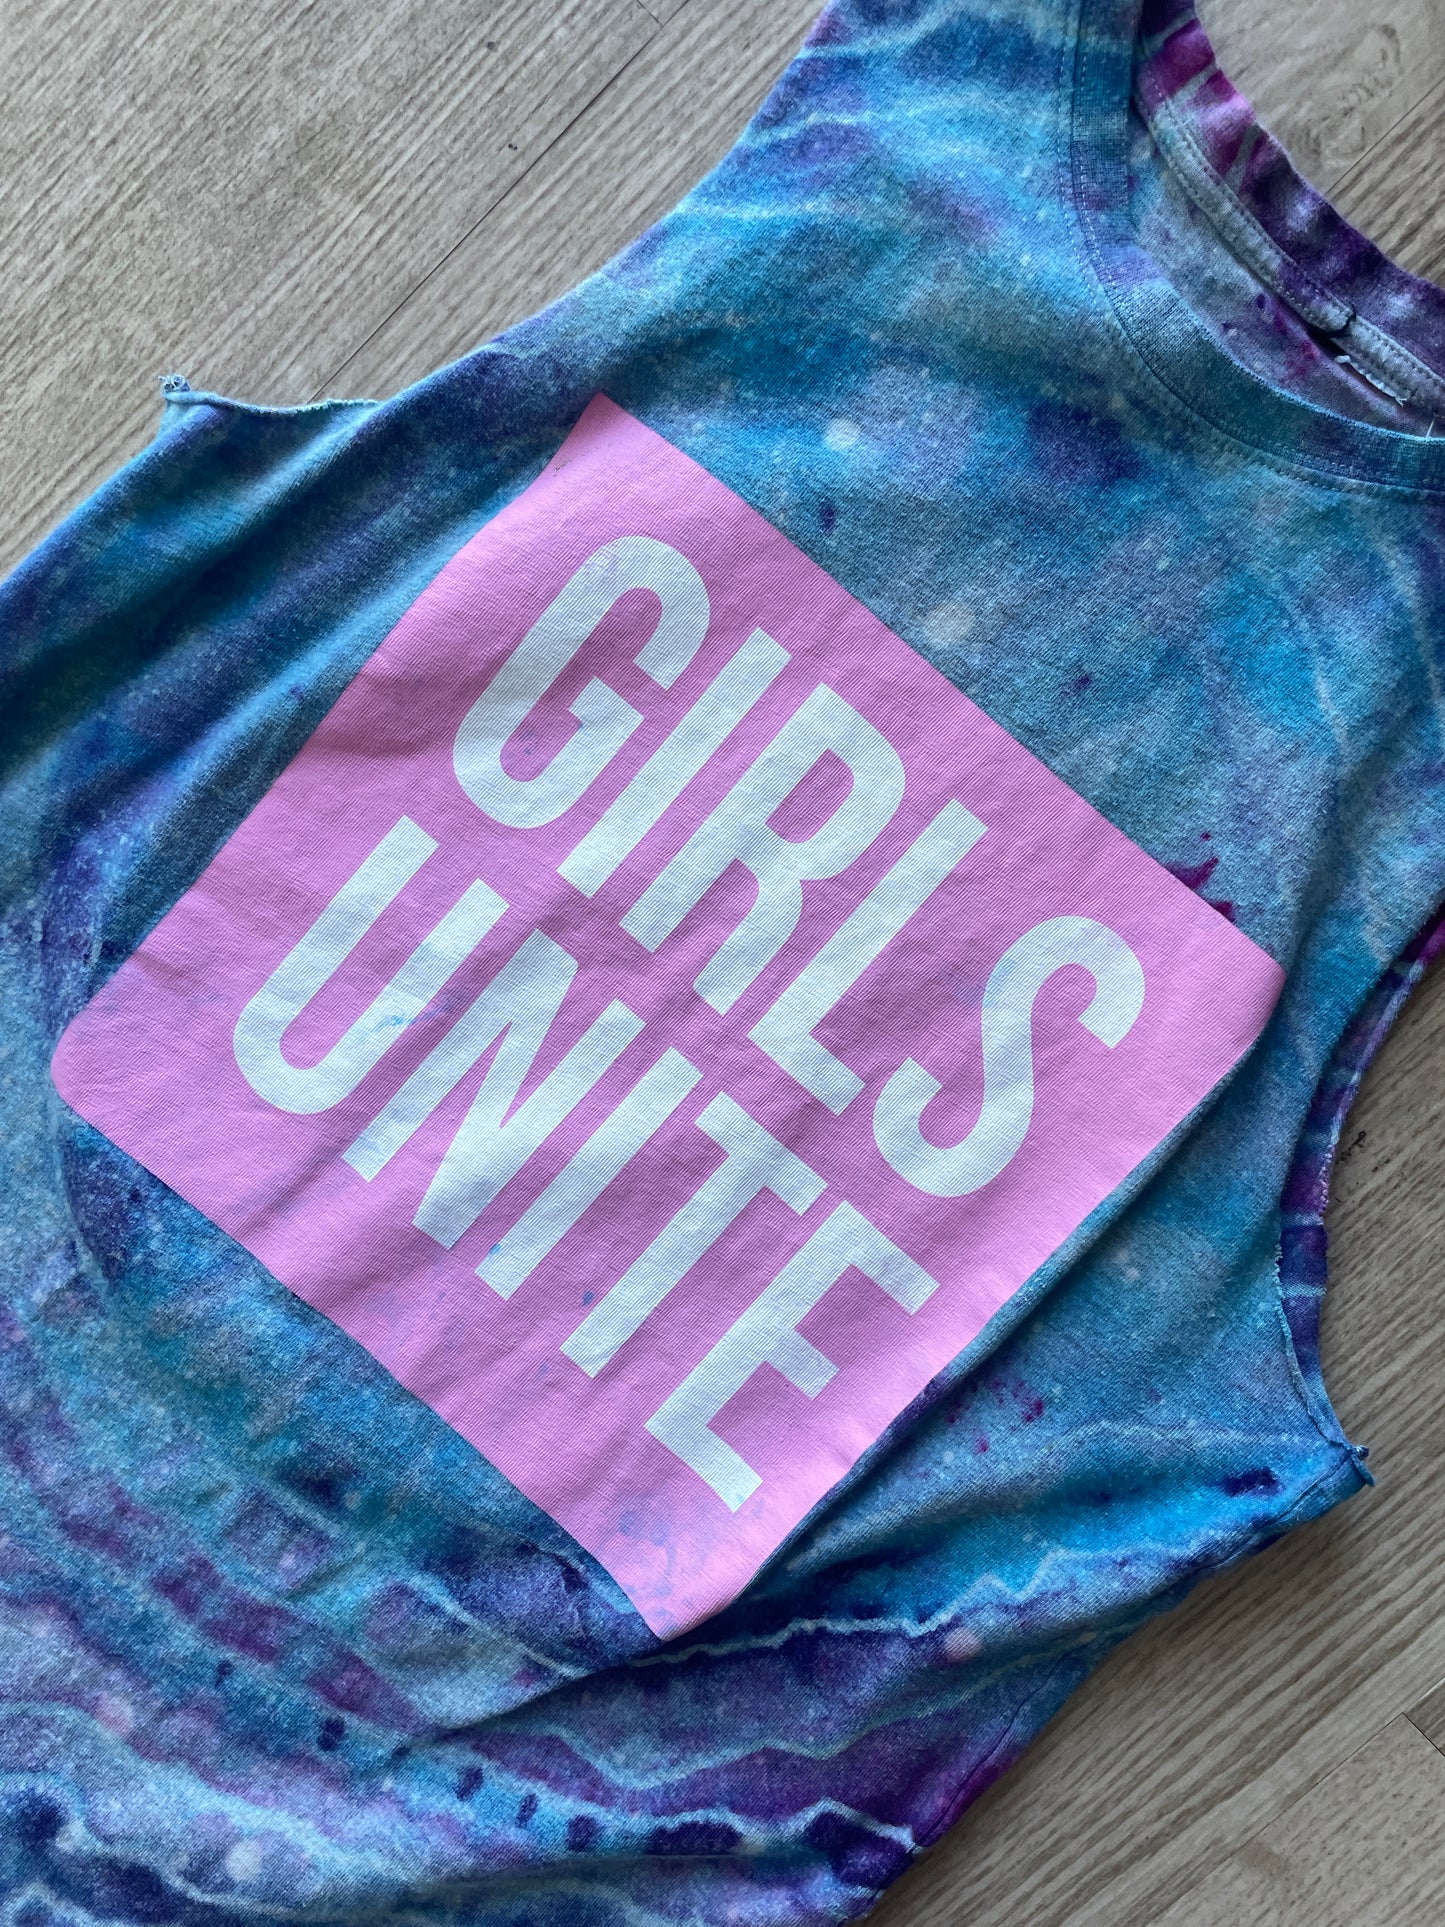 MEDIUM Women's Girls Unite Handmade Tie Dye Long-Line Tank Top Dress | One-Of-a-Kind Upcycled Blue and Purple Geode Sleeveless Top/Dress